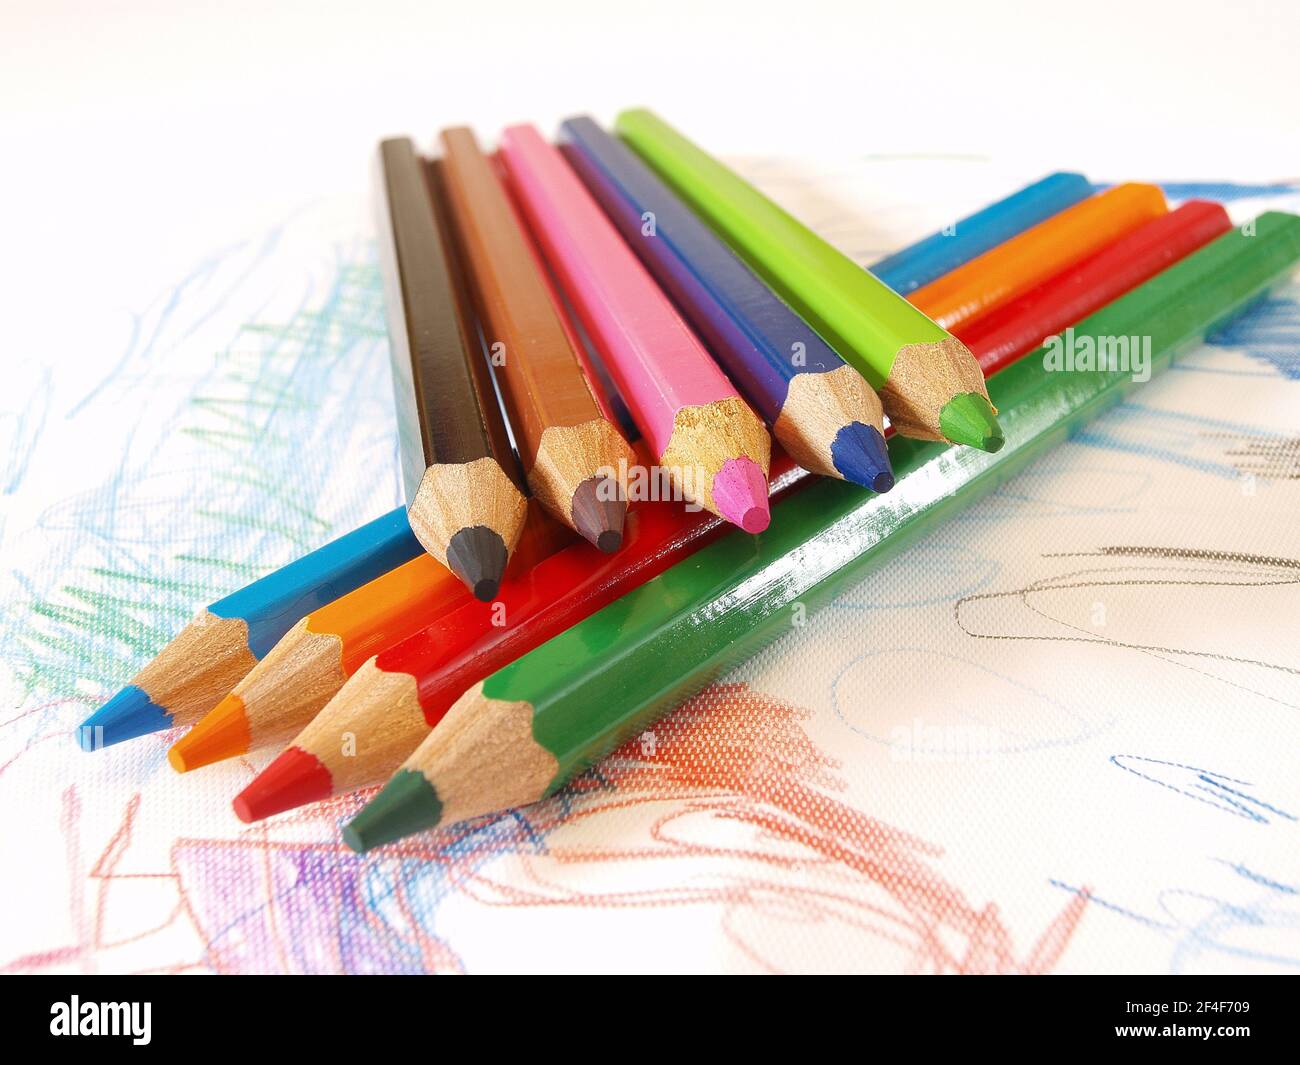 Mal so richtig kreativ sein und mit Buntstiften tolle Bilder malen. - Be really creative and draw great pictures with colored pencils. Stock Photo